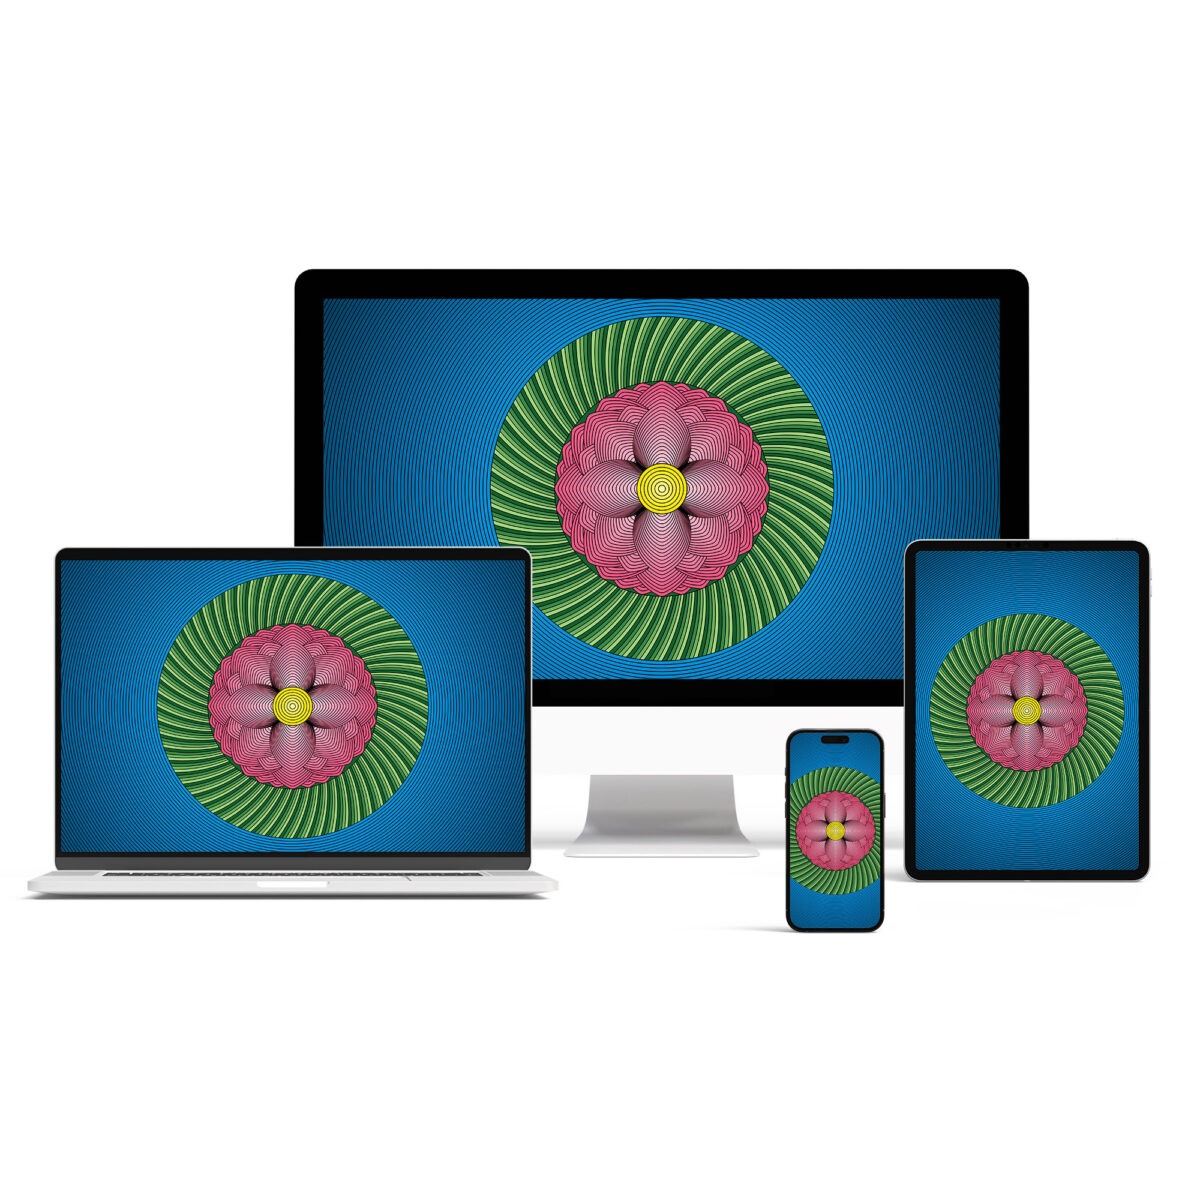 Desktop, laptop, tablet, and mobile phone with Lotus Flower digital wallpaper backgrounds.